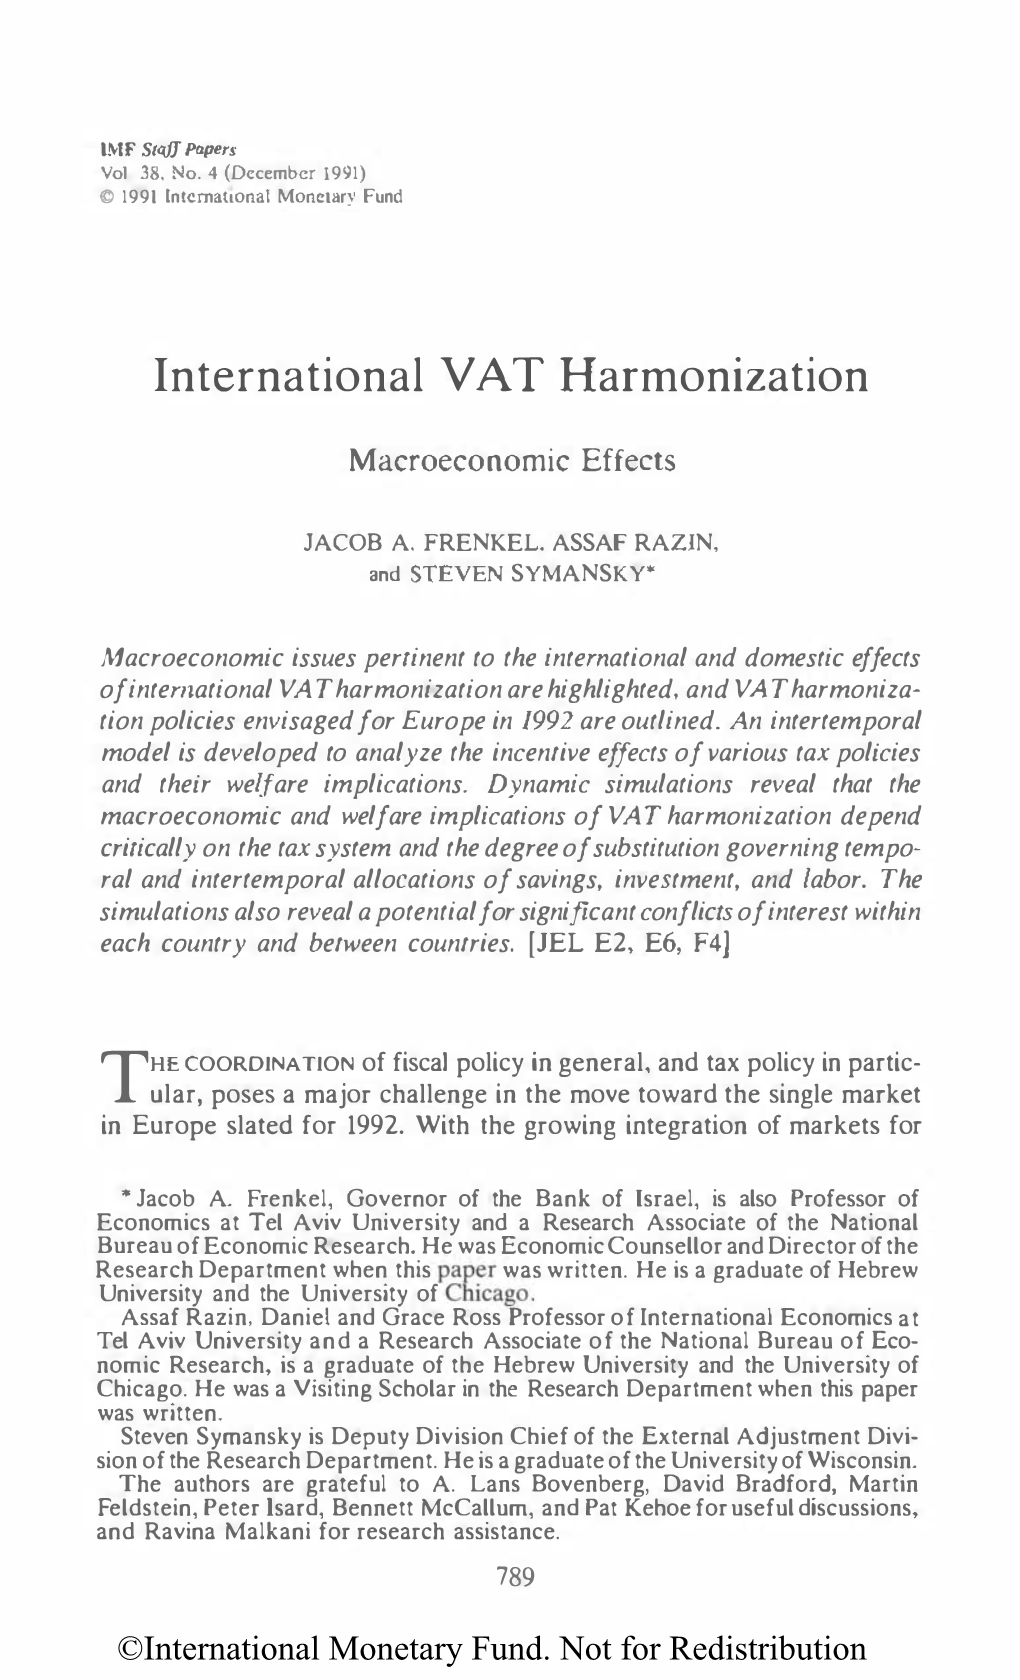 International VAT Harmonization: Macroeconomic Effects